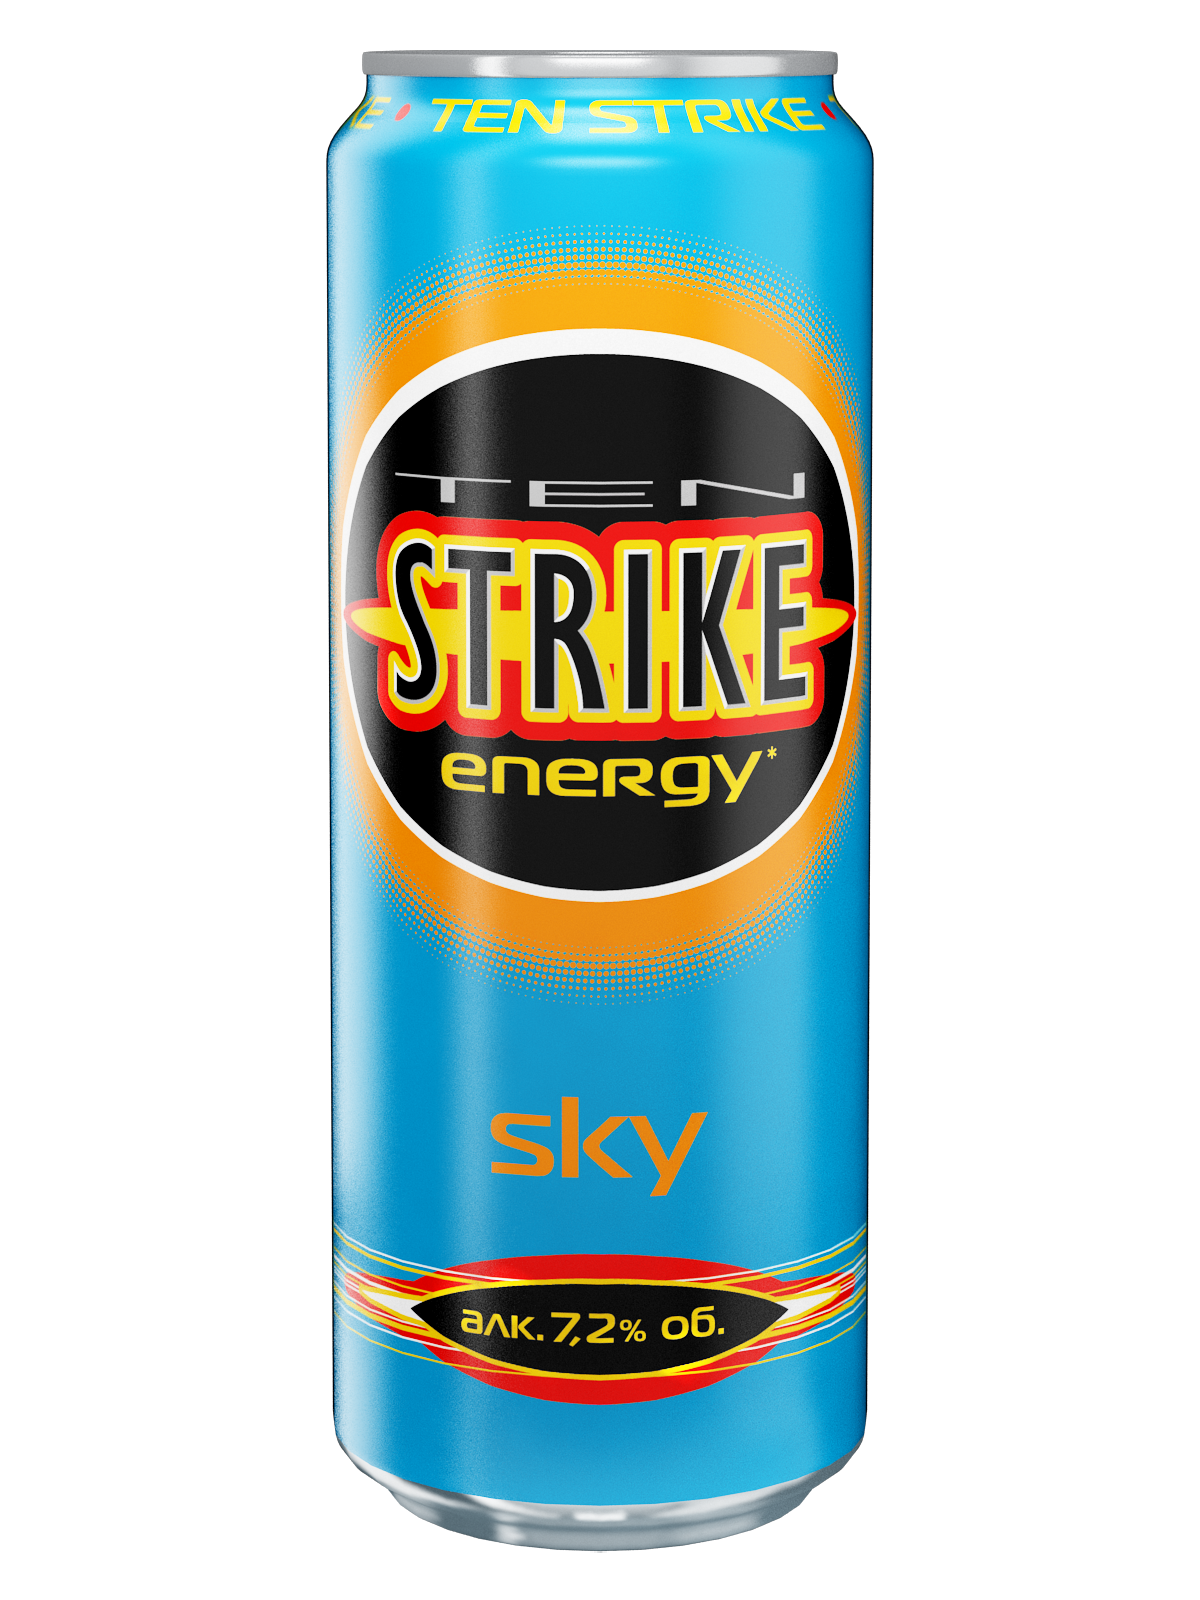 Страйк энергетики. Страйк напиток. Strike Энергетик. Strike Sky Энергетик. Страйк слабоалкогольный напиток.